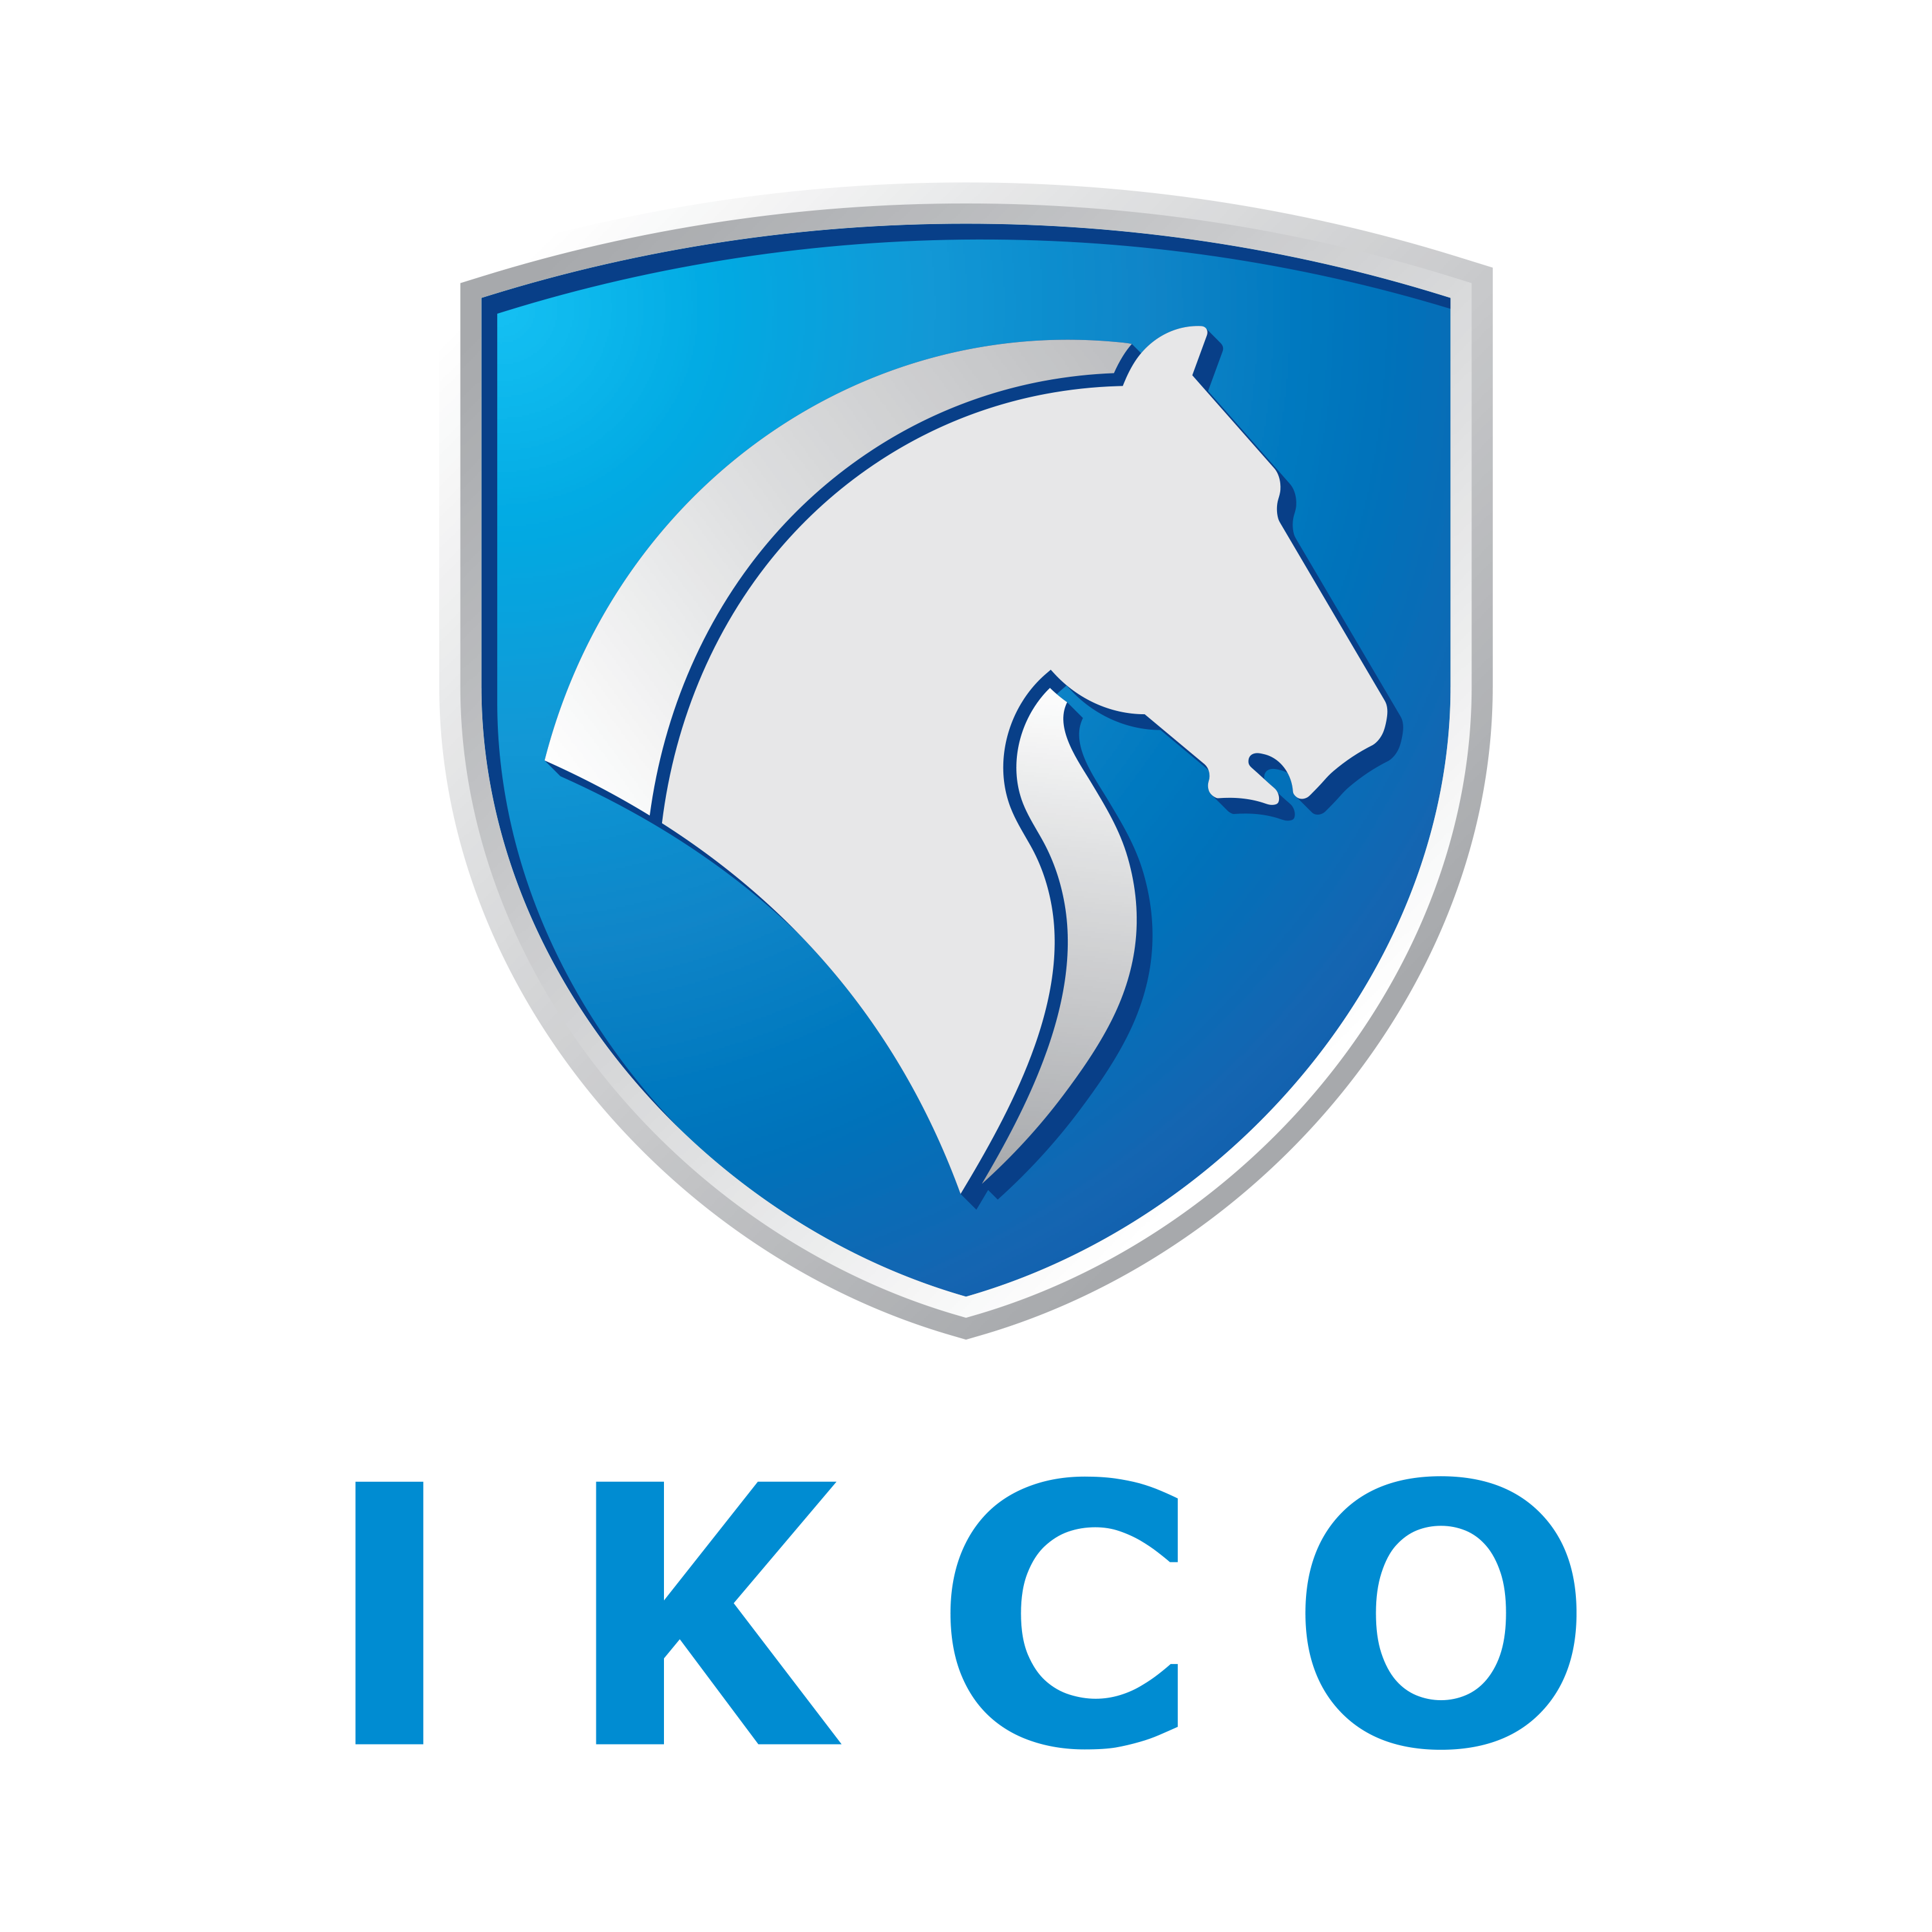 Машина с лошадью на эмблеме. Iran Khodro logo. Iran Khodro (IKCO). Iran Khodro Samand значок авто. Авто с лошадью на эмблеме.